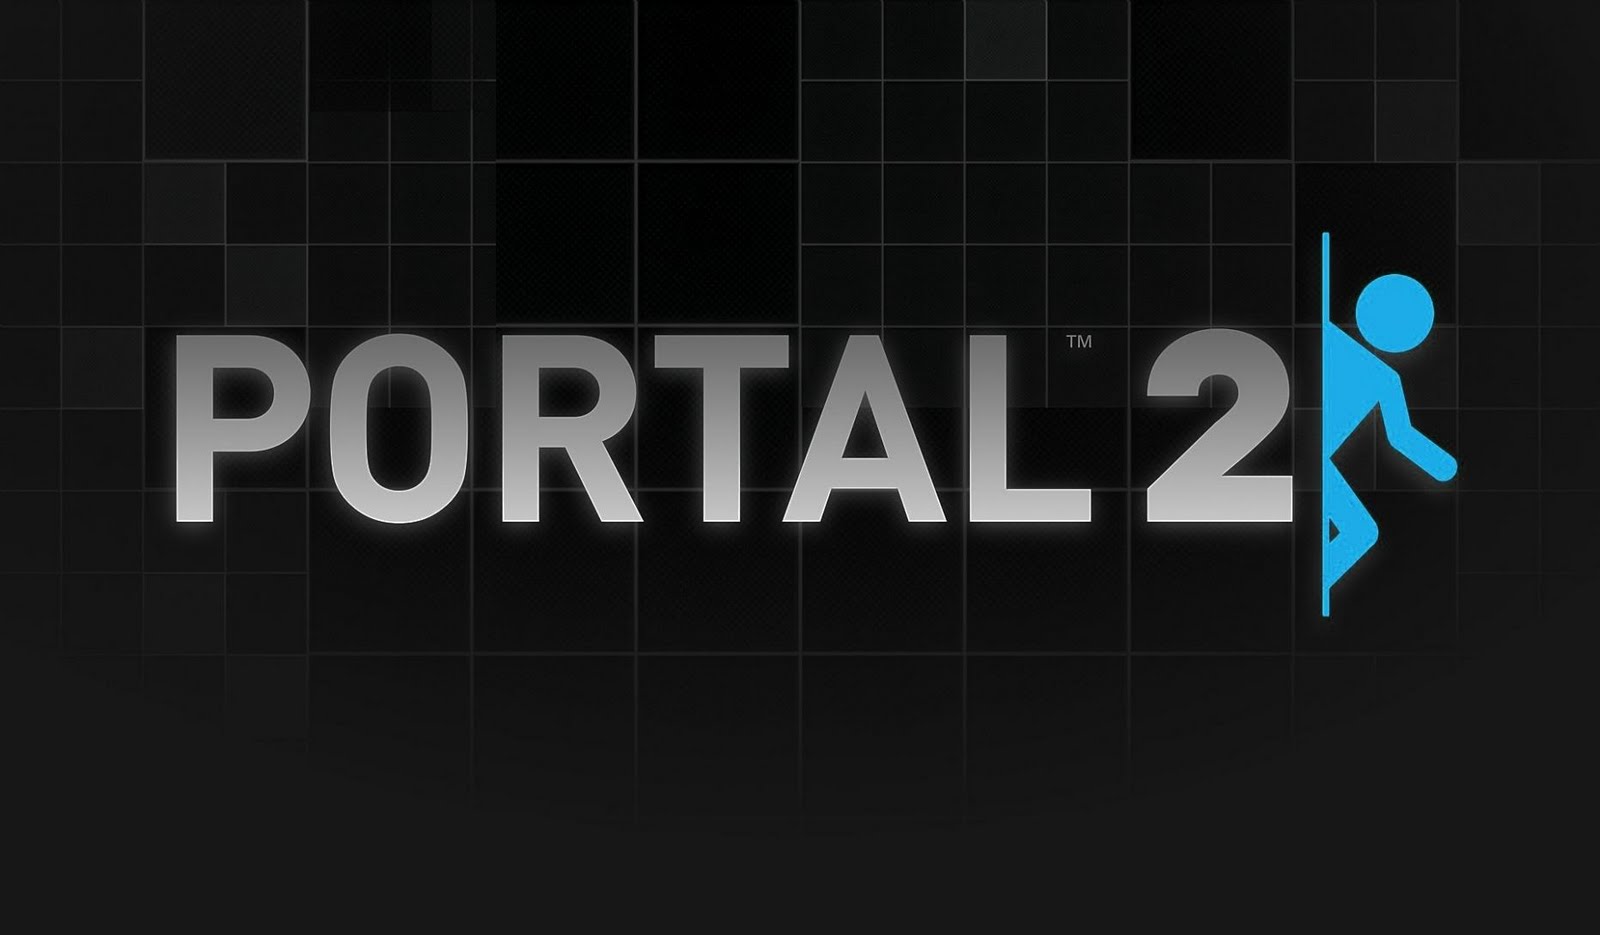 portal 2 full hd wallpaper is a great wallpaper for your desktop you